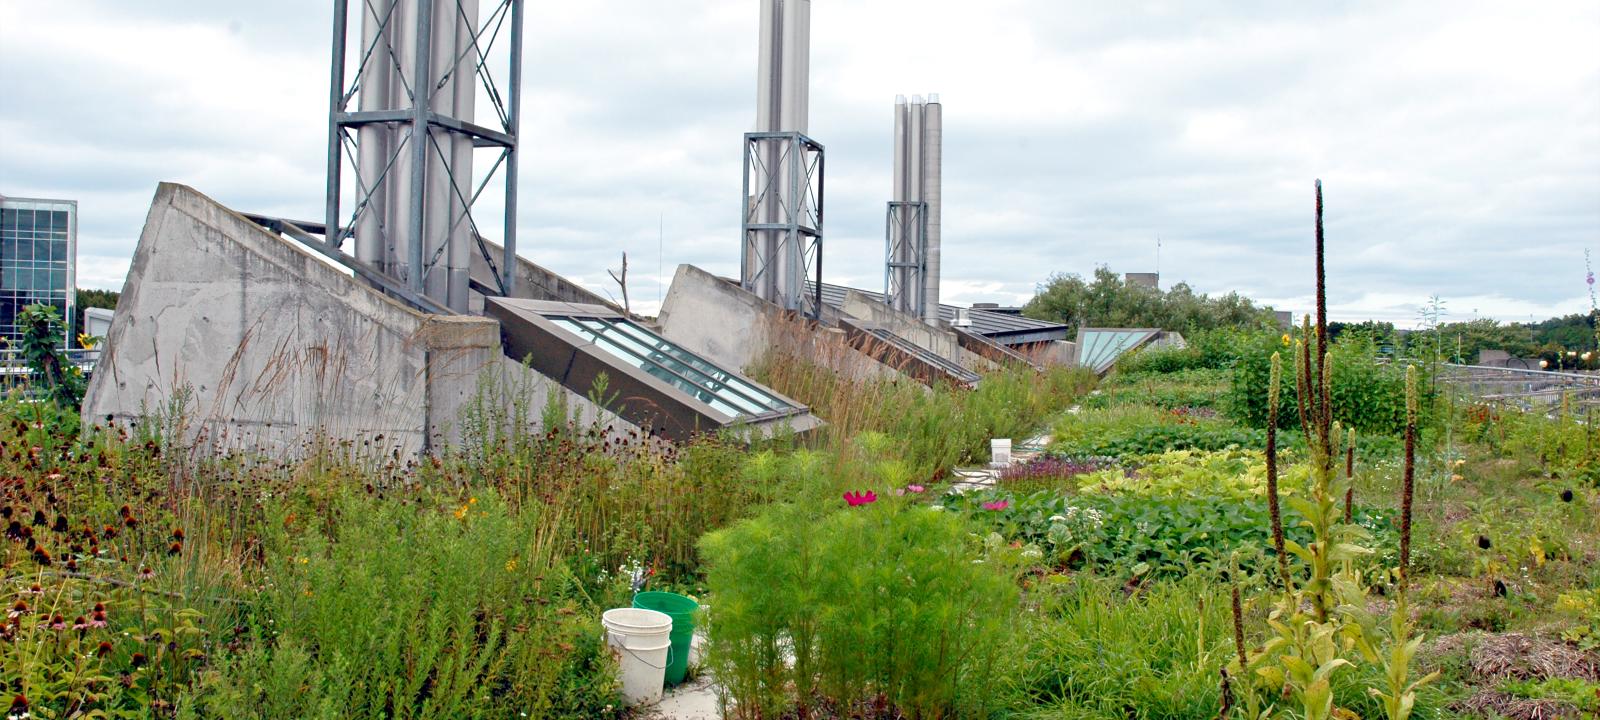 Urban rooftop farming